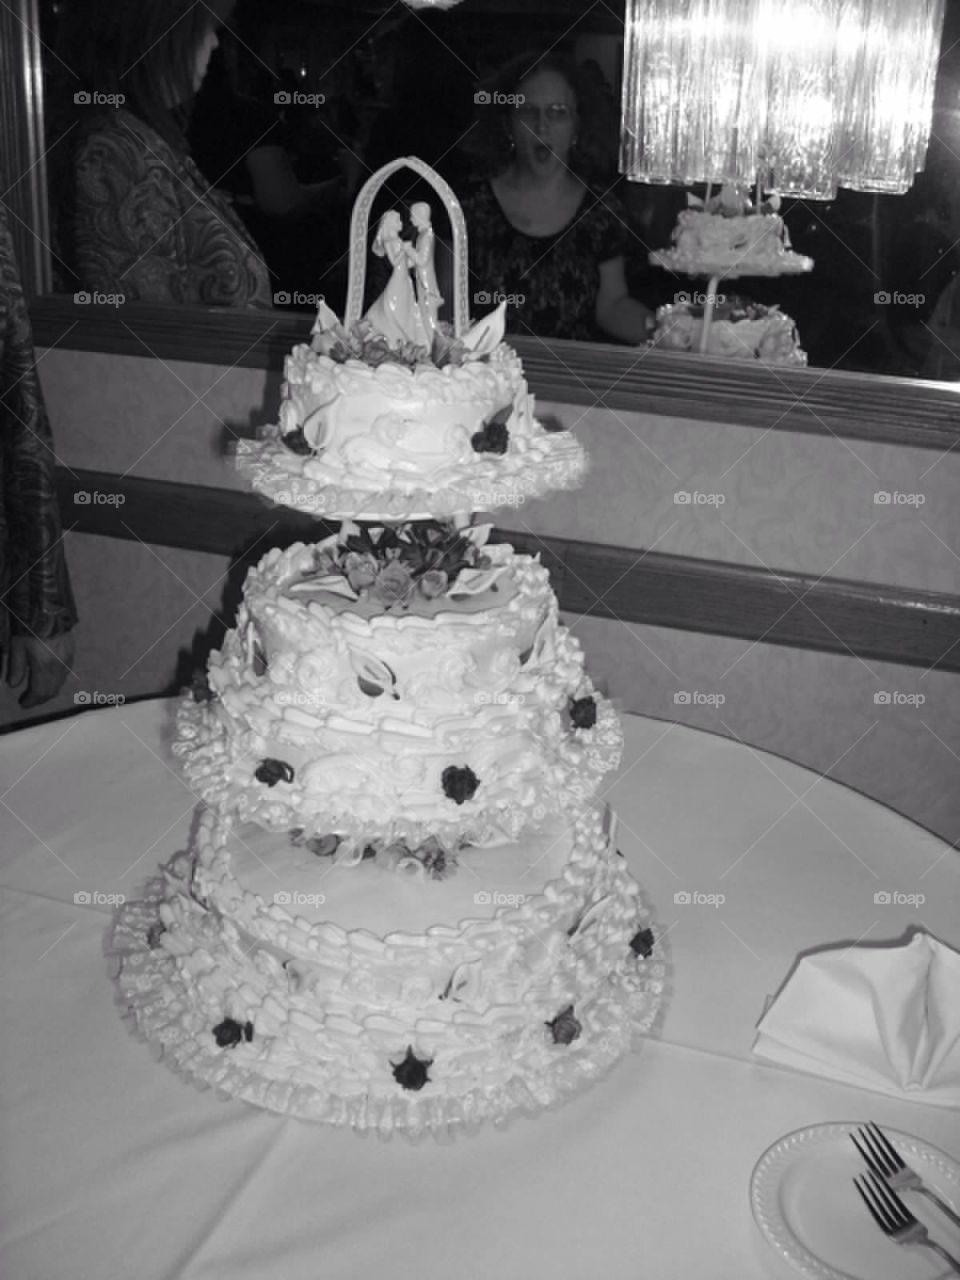 cake dessert wedding black and white by Nannon87